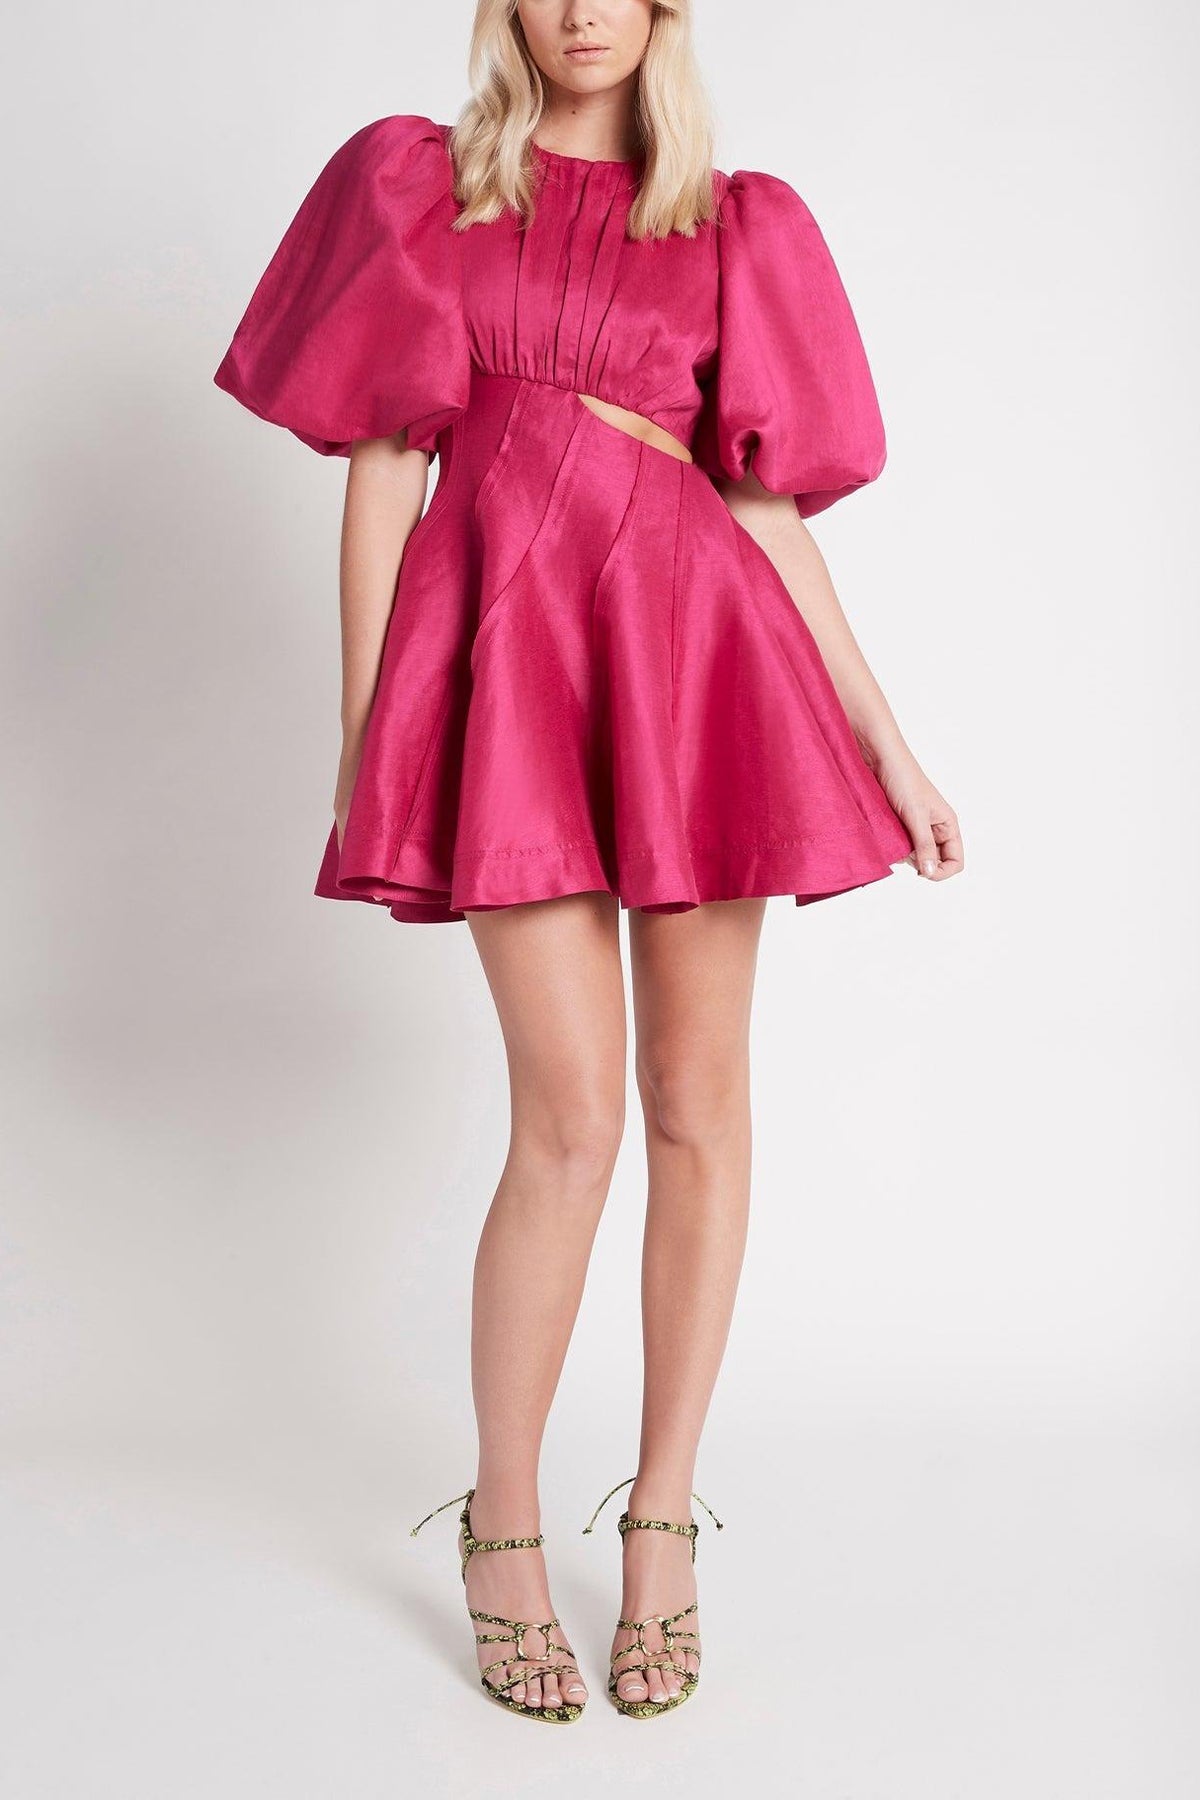 Admiration Asymmetric Mini Dress in Fuchsia - shop-olivia.com